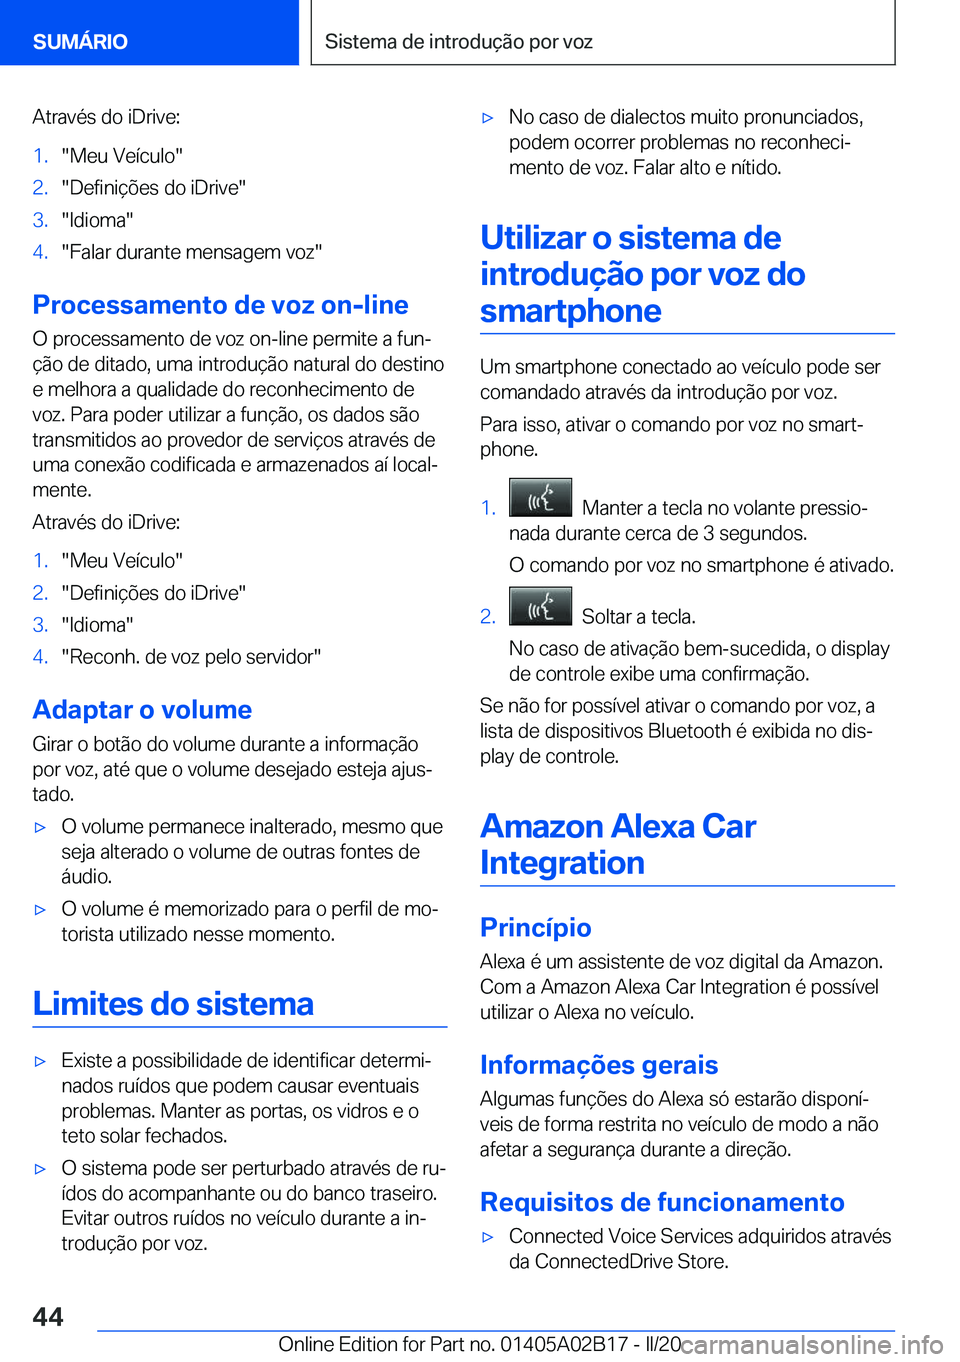 BMW X1 2020  Manual do condutor (in Portuguese) �A�t�r�a�v�é�s��d�o��i�D�r�i�v�e�:�1�.��M�e�u��V�e�